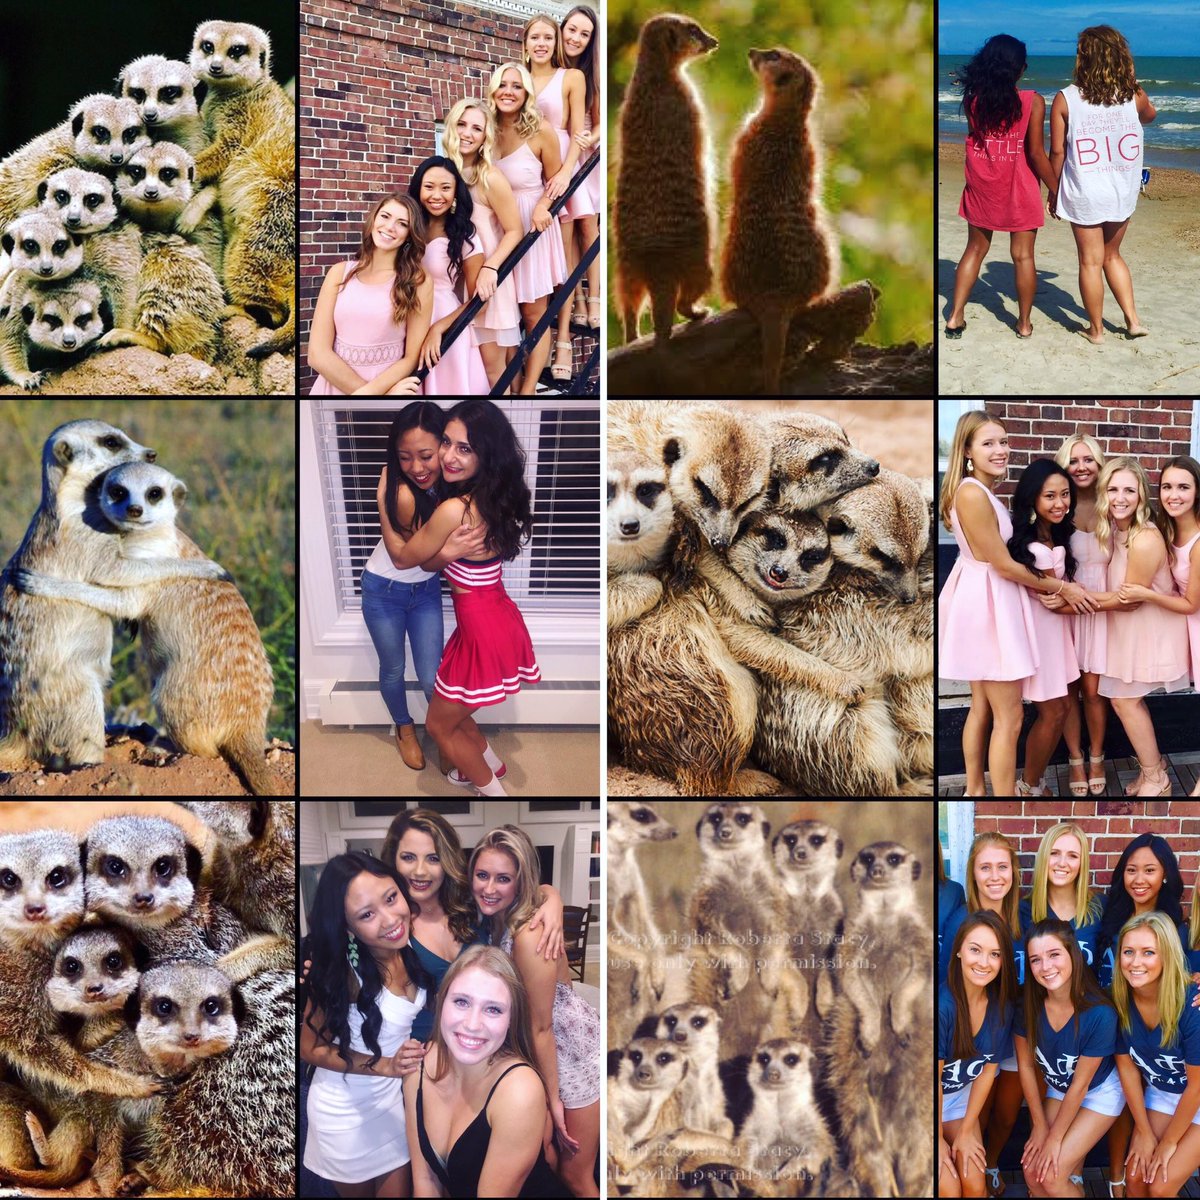 Sorority girls pose exactly like meerkats in pictures